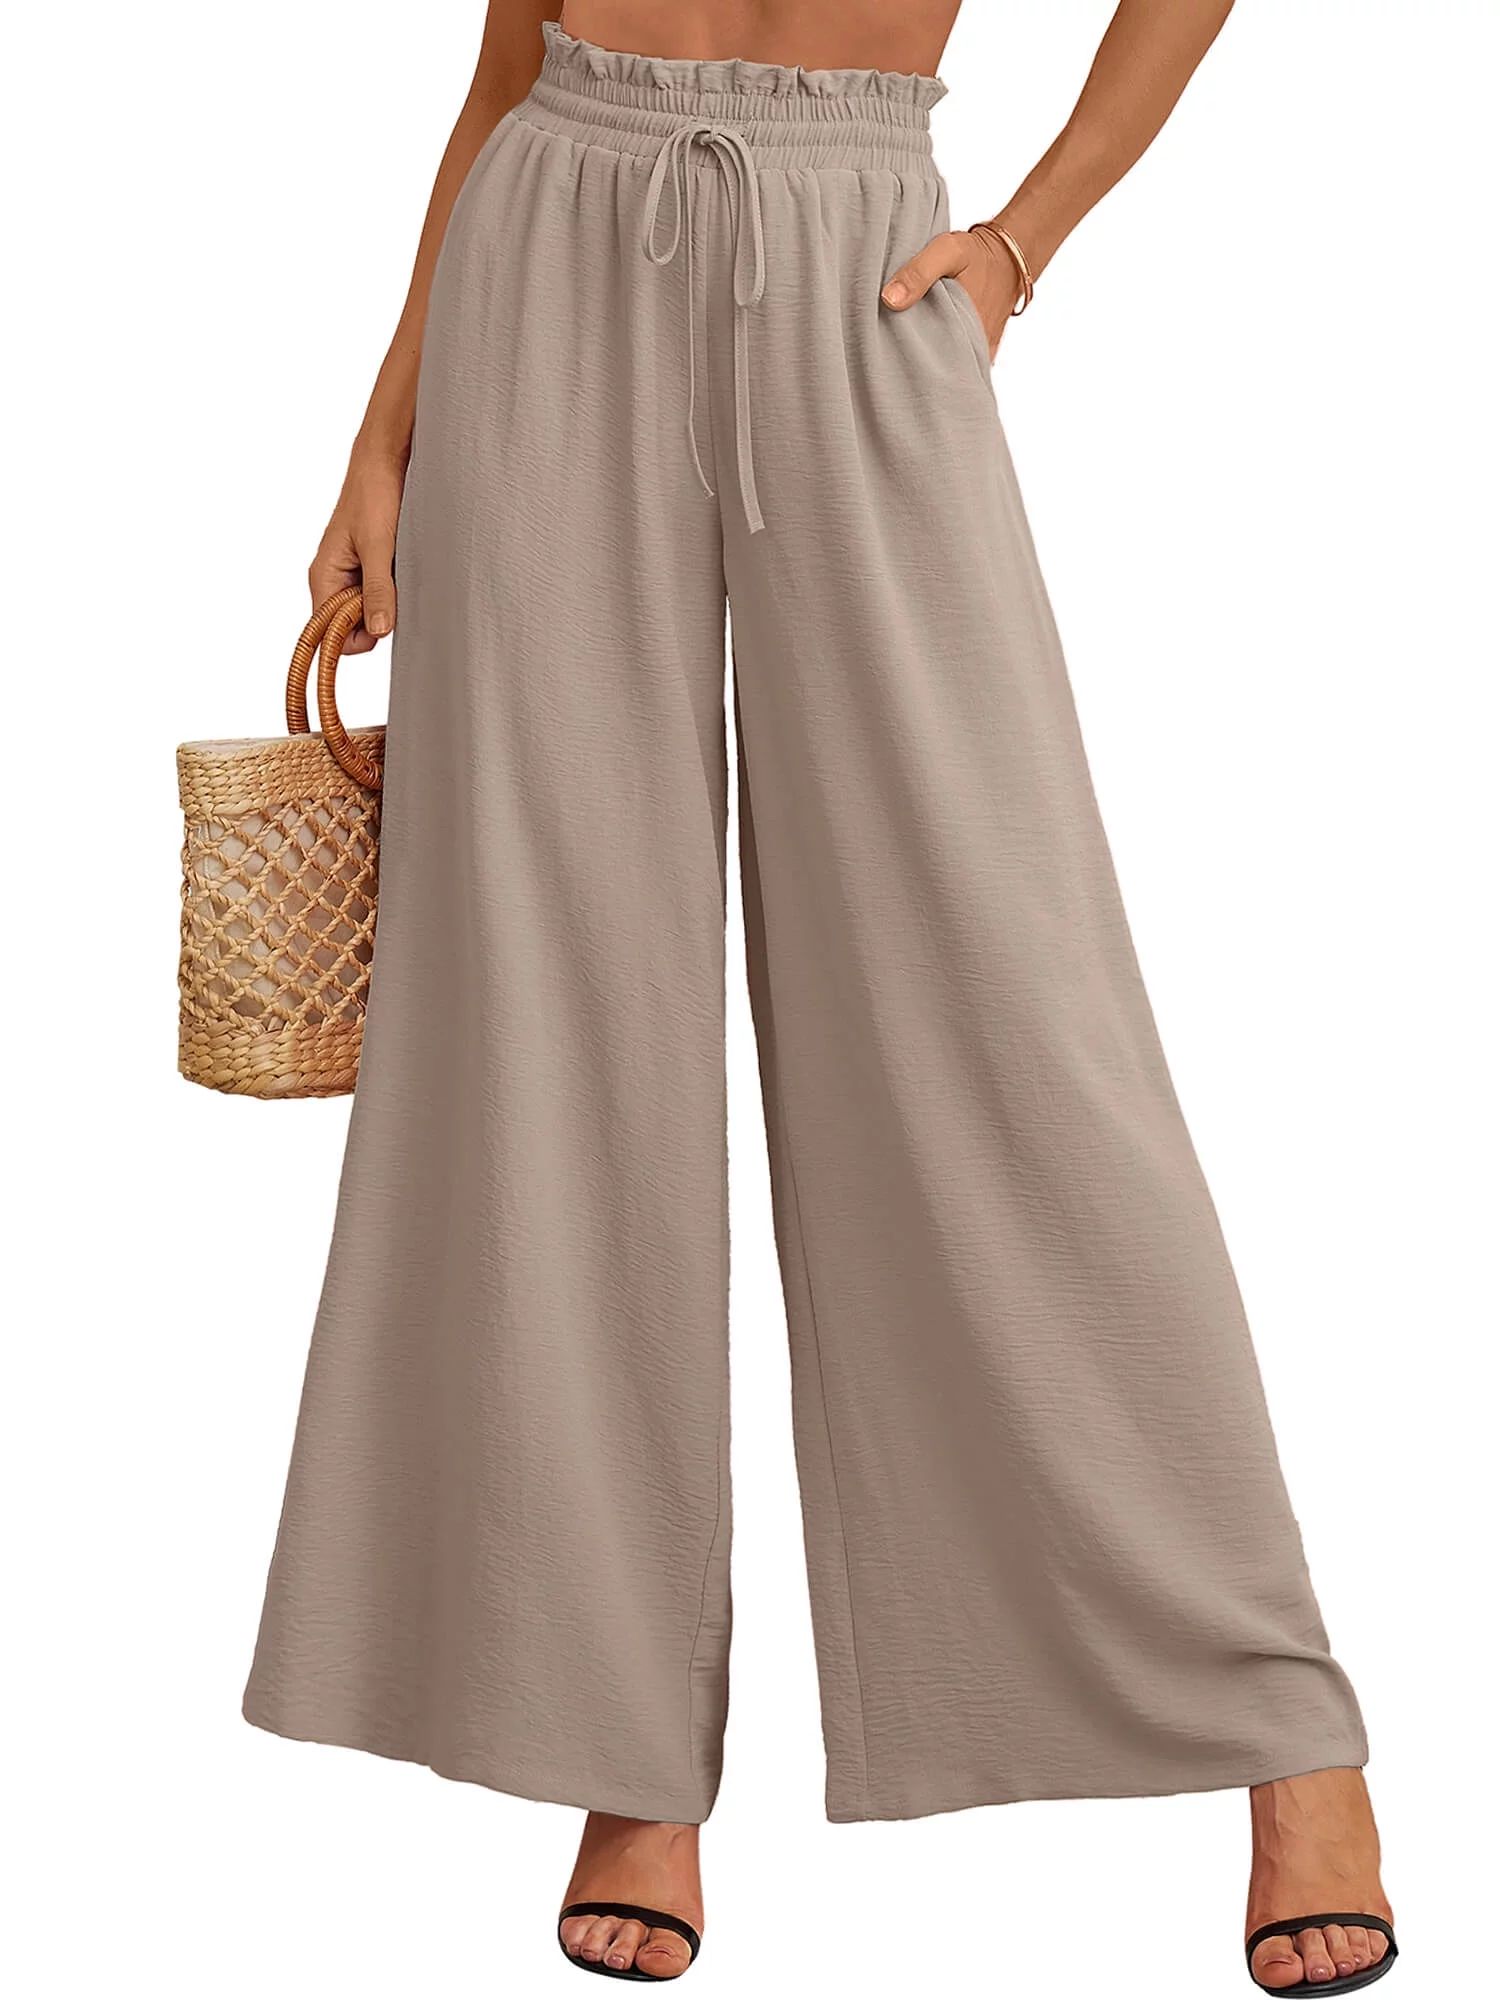 SHOWMALL Women's Pants Casual Elastic High Waisted Wide Leg Pants Wheat L Palazzo Pants with Pock... | Walmart (US)